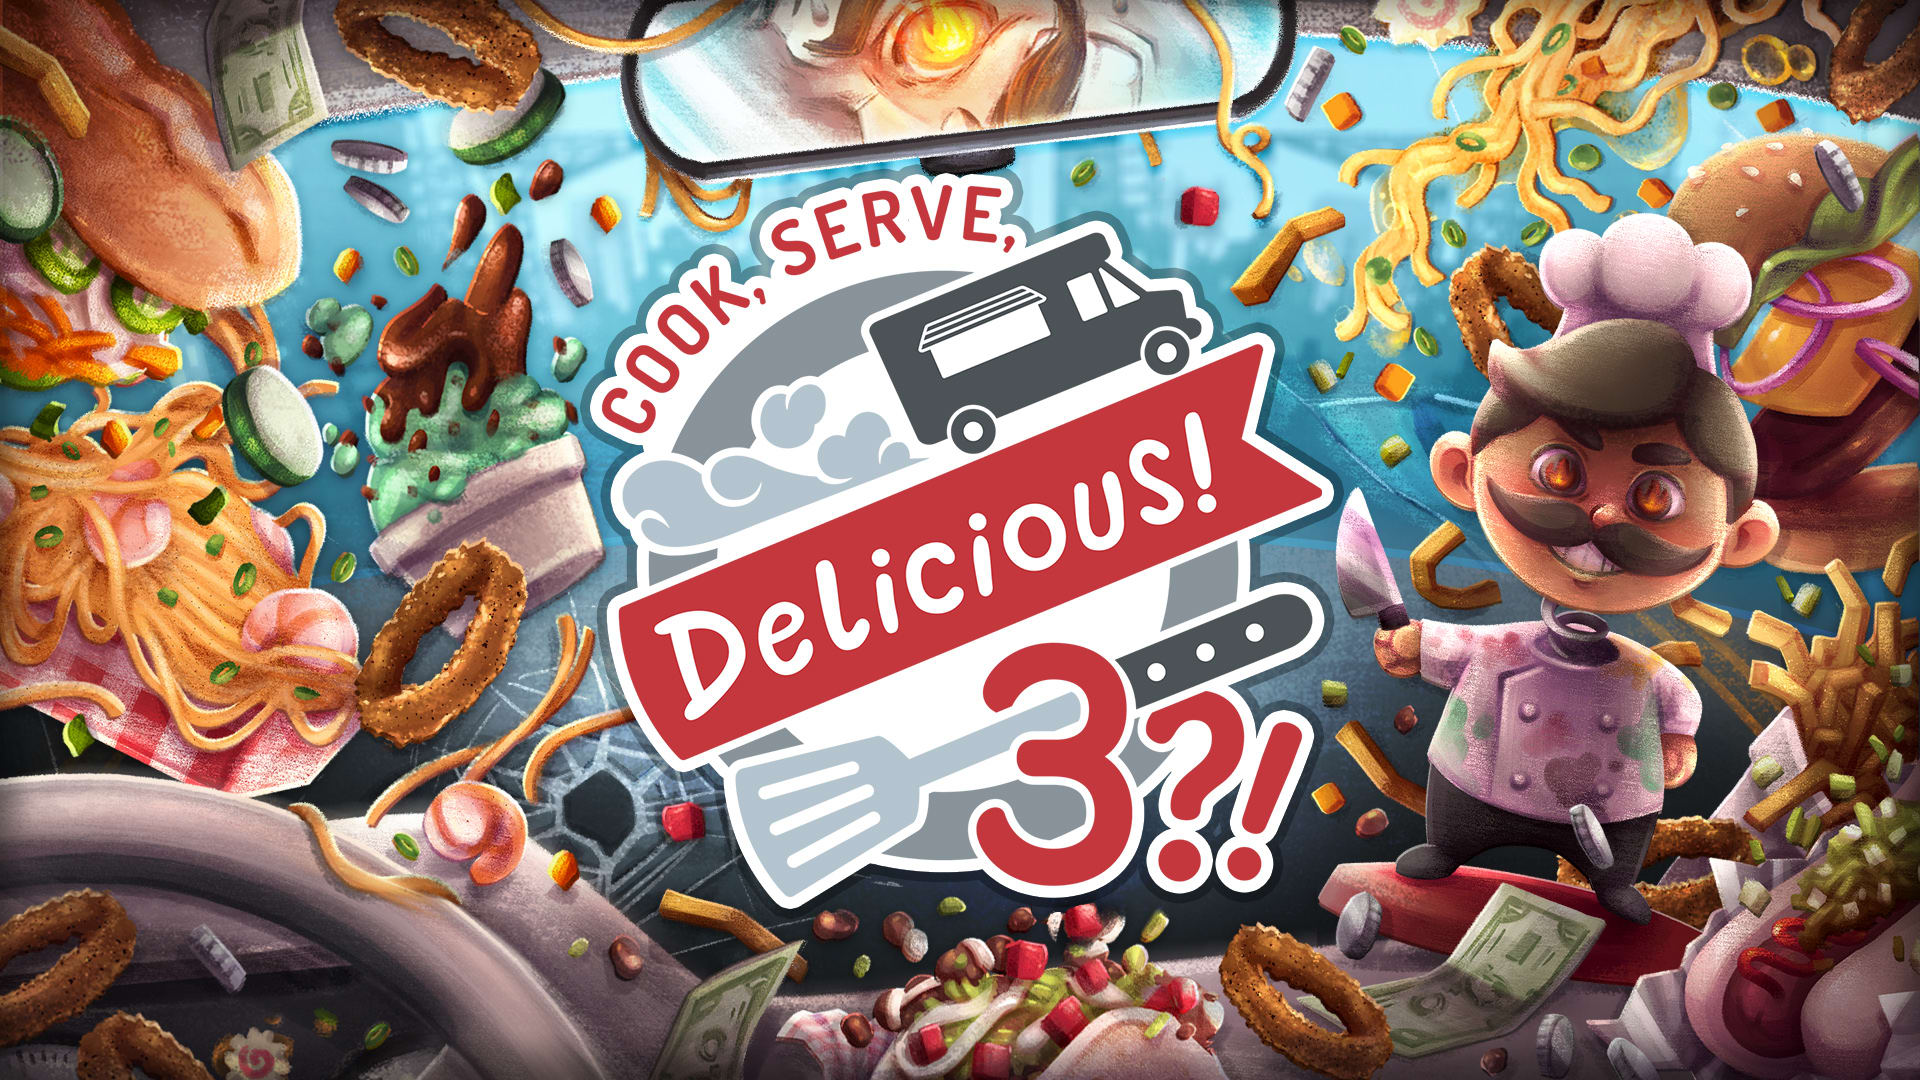 Cook, Serve, Delicious! 3?! 1